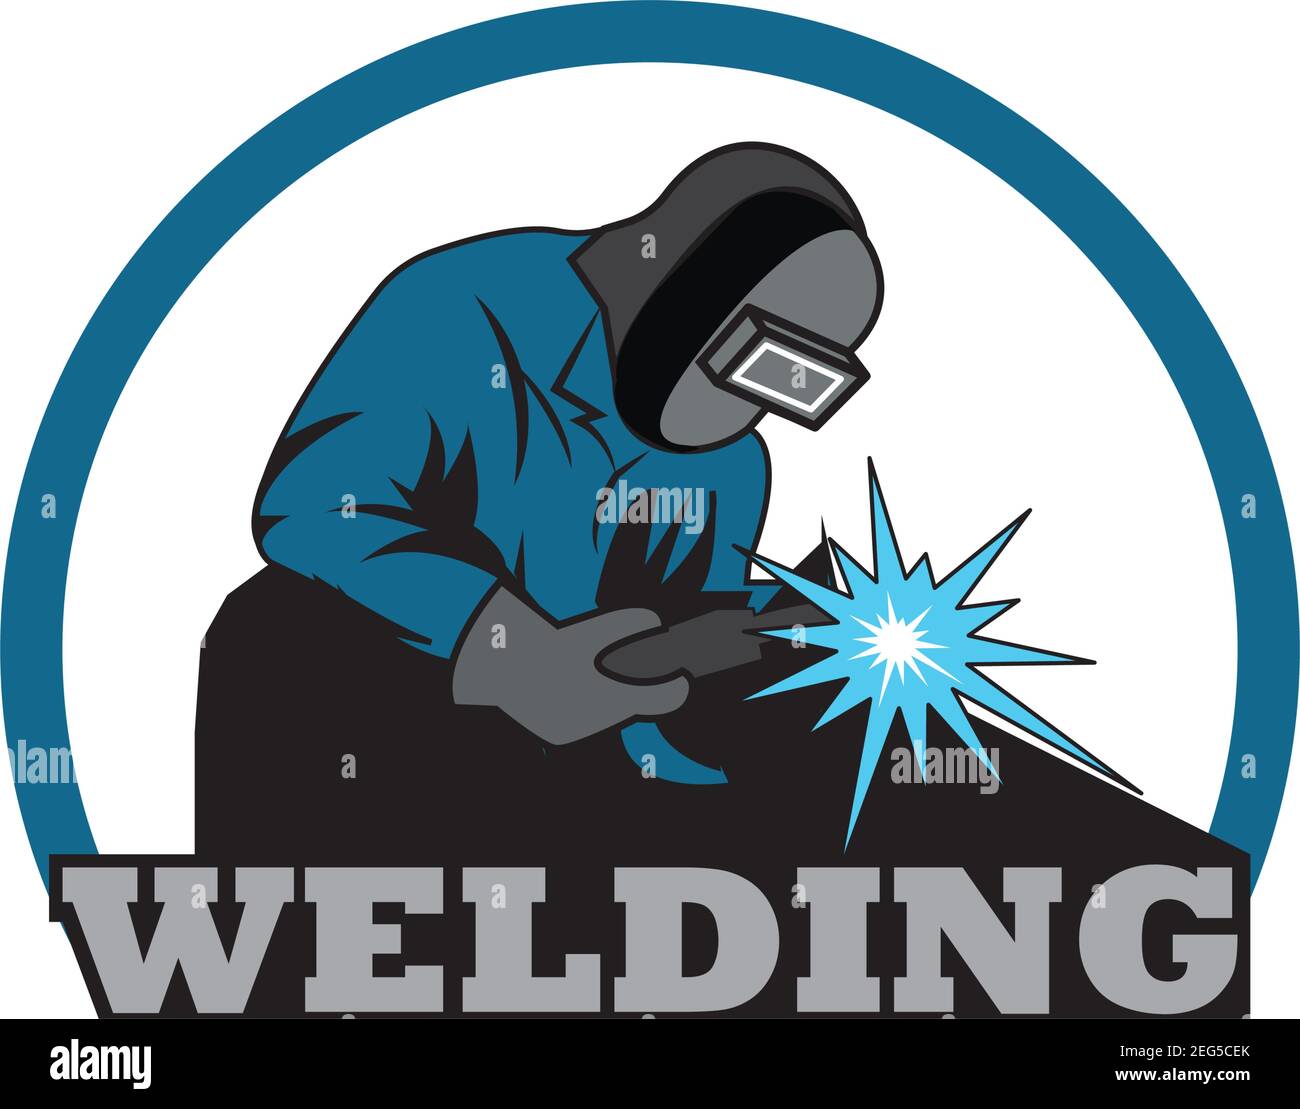 welding icon vetor illustration design template Stock Vector Image ...